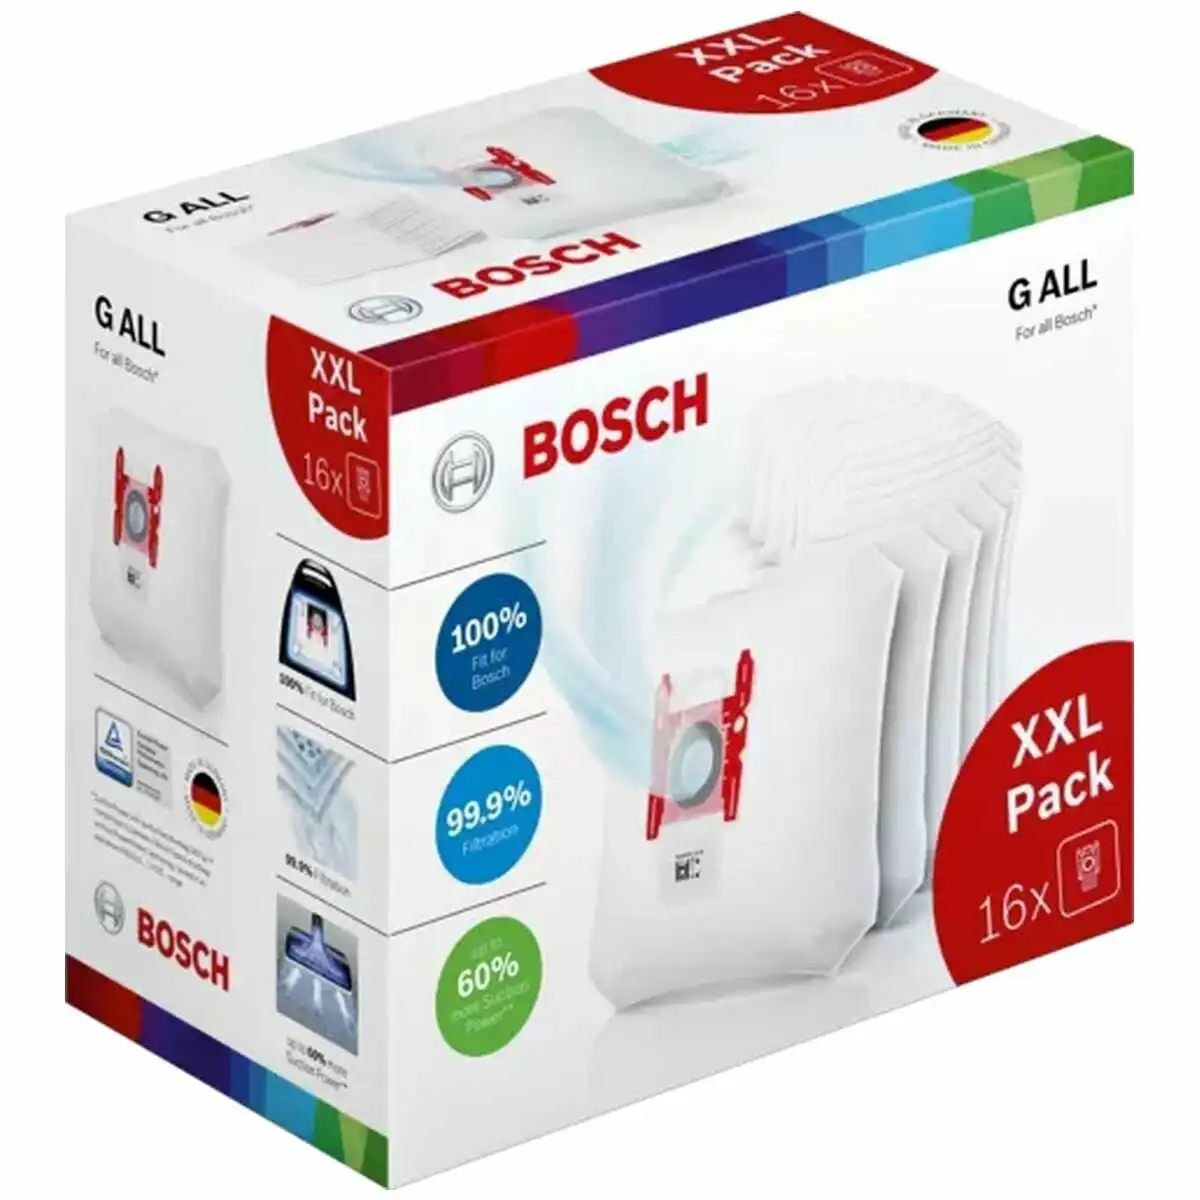 Bosch XXL GALL Vacuum Cleaner Bags